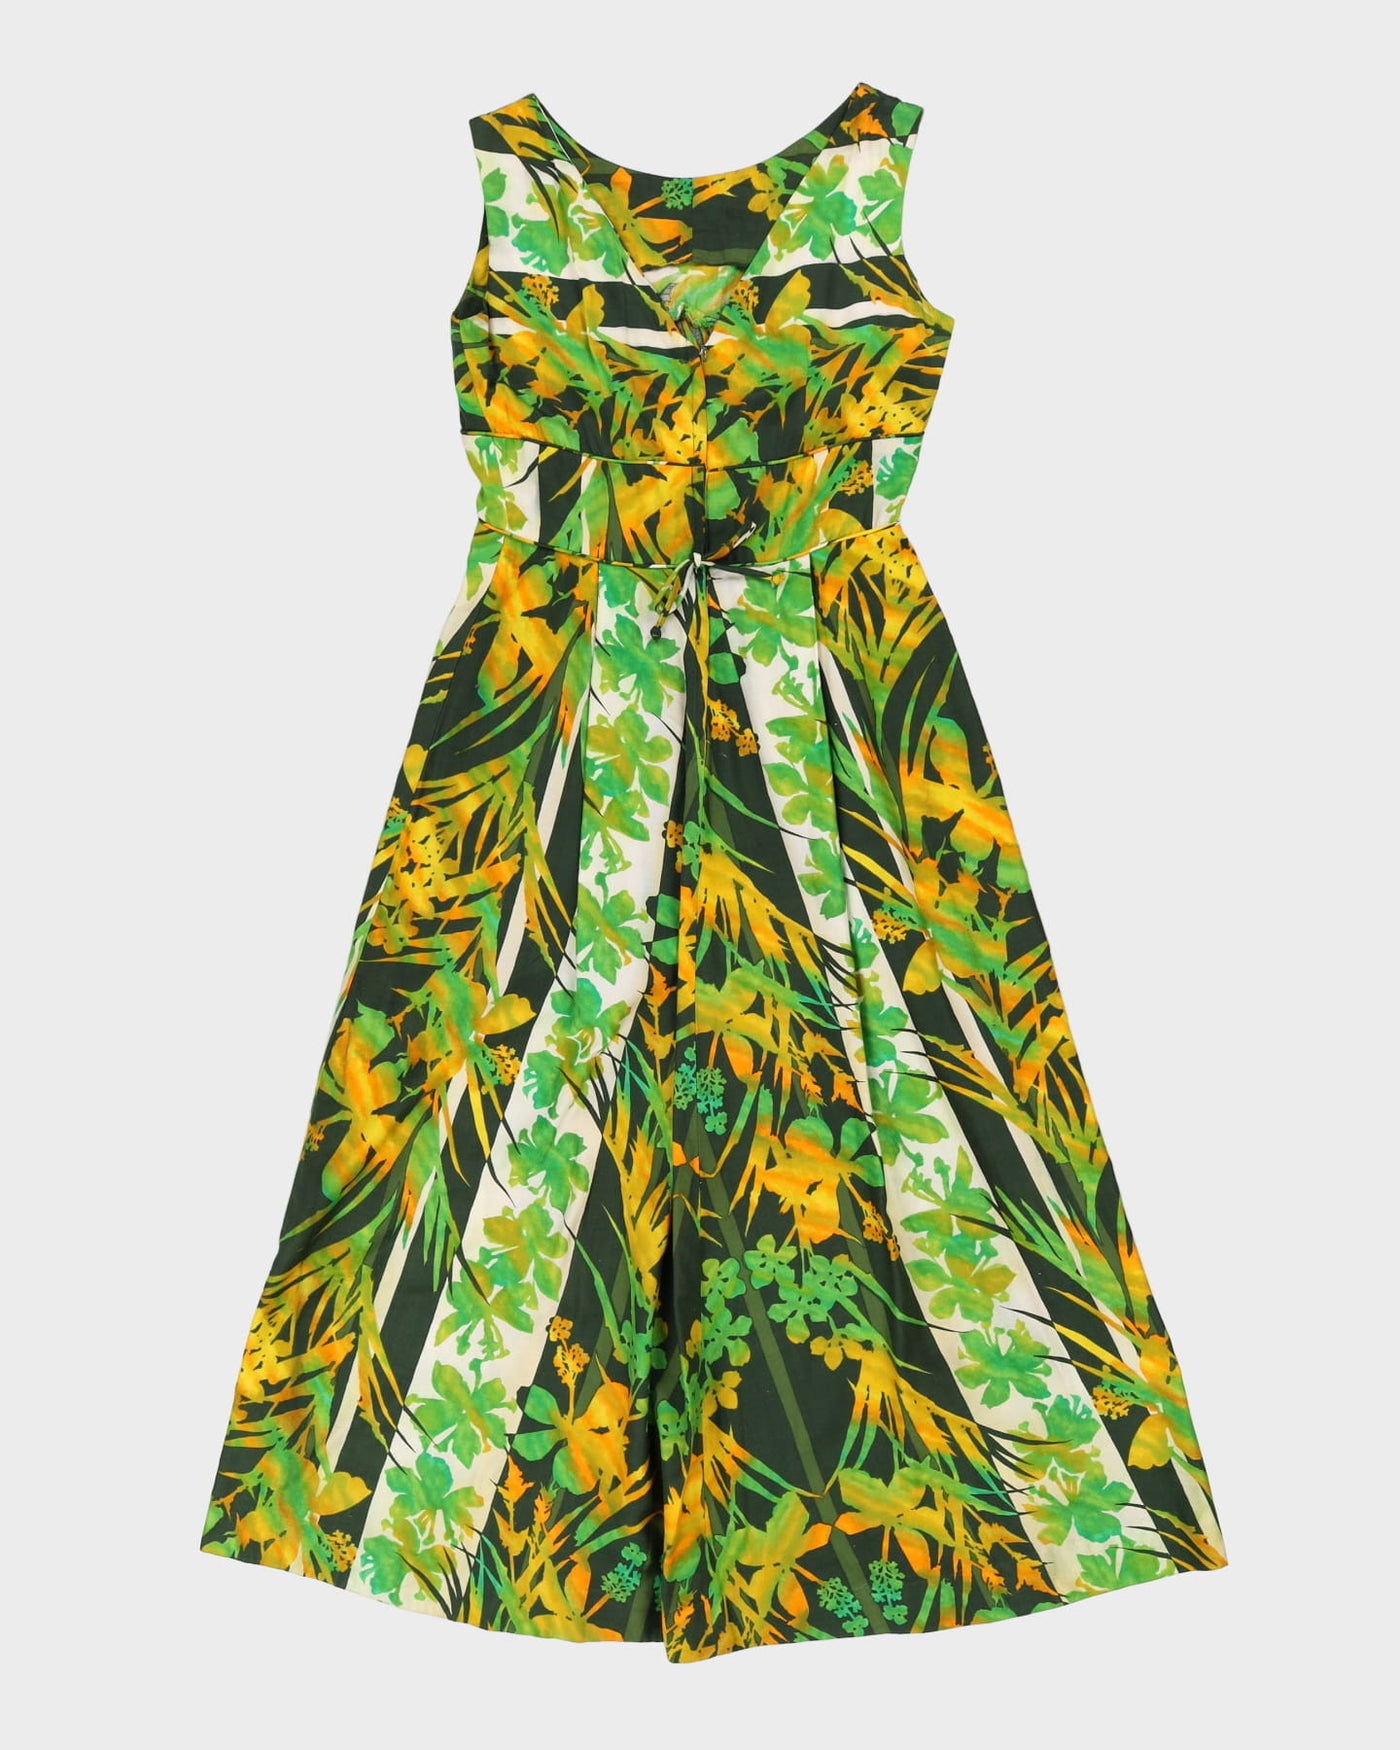 Vintage 1970s Green Patterned Hawaiian Dress - S